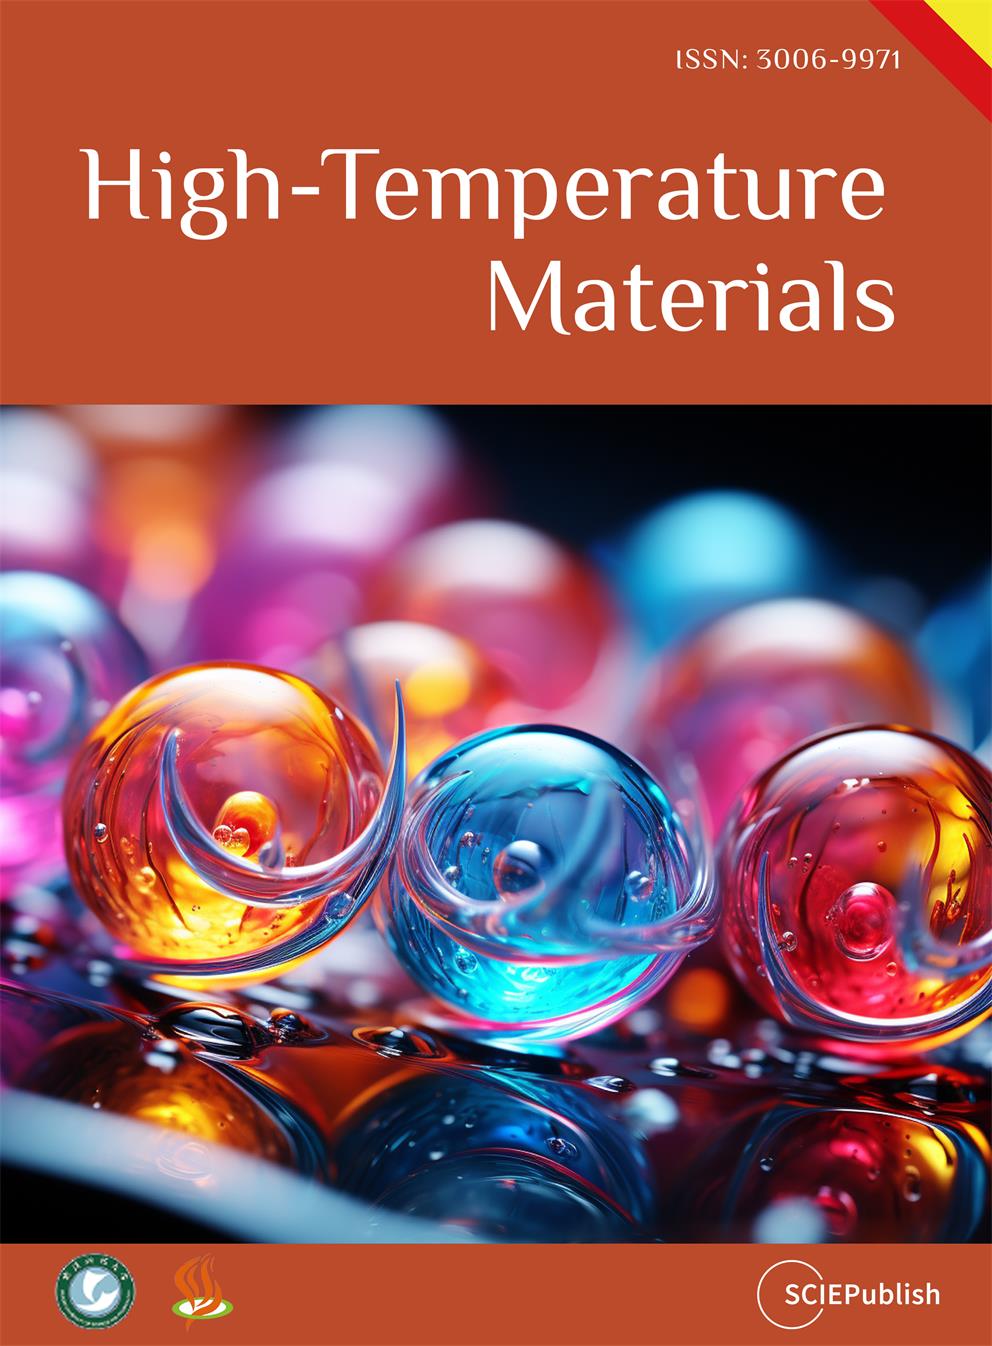 High-Temperature Materials-logo